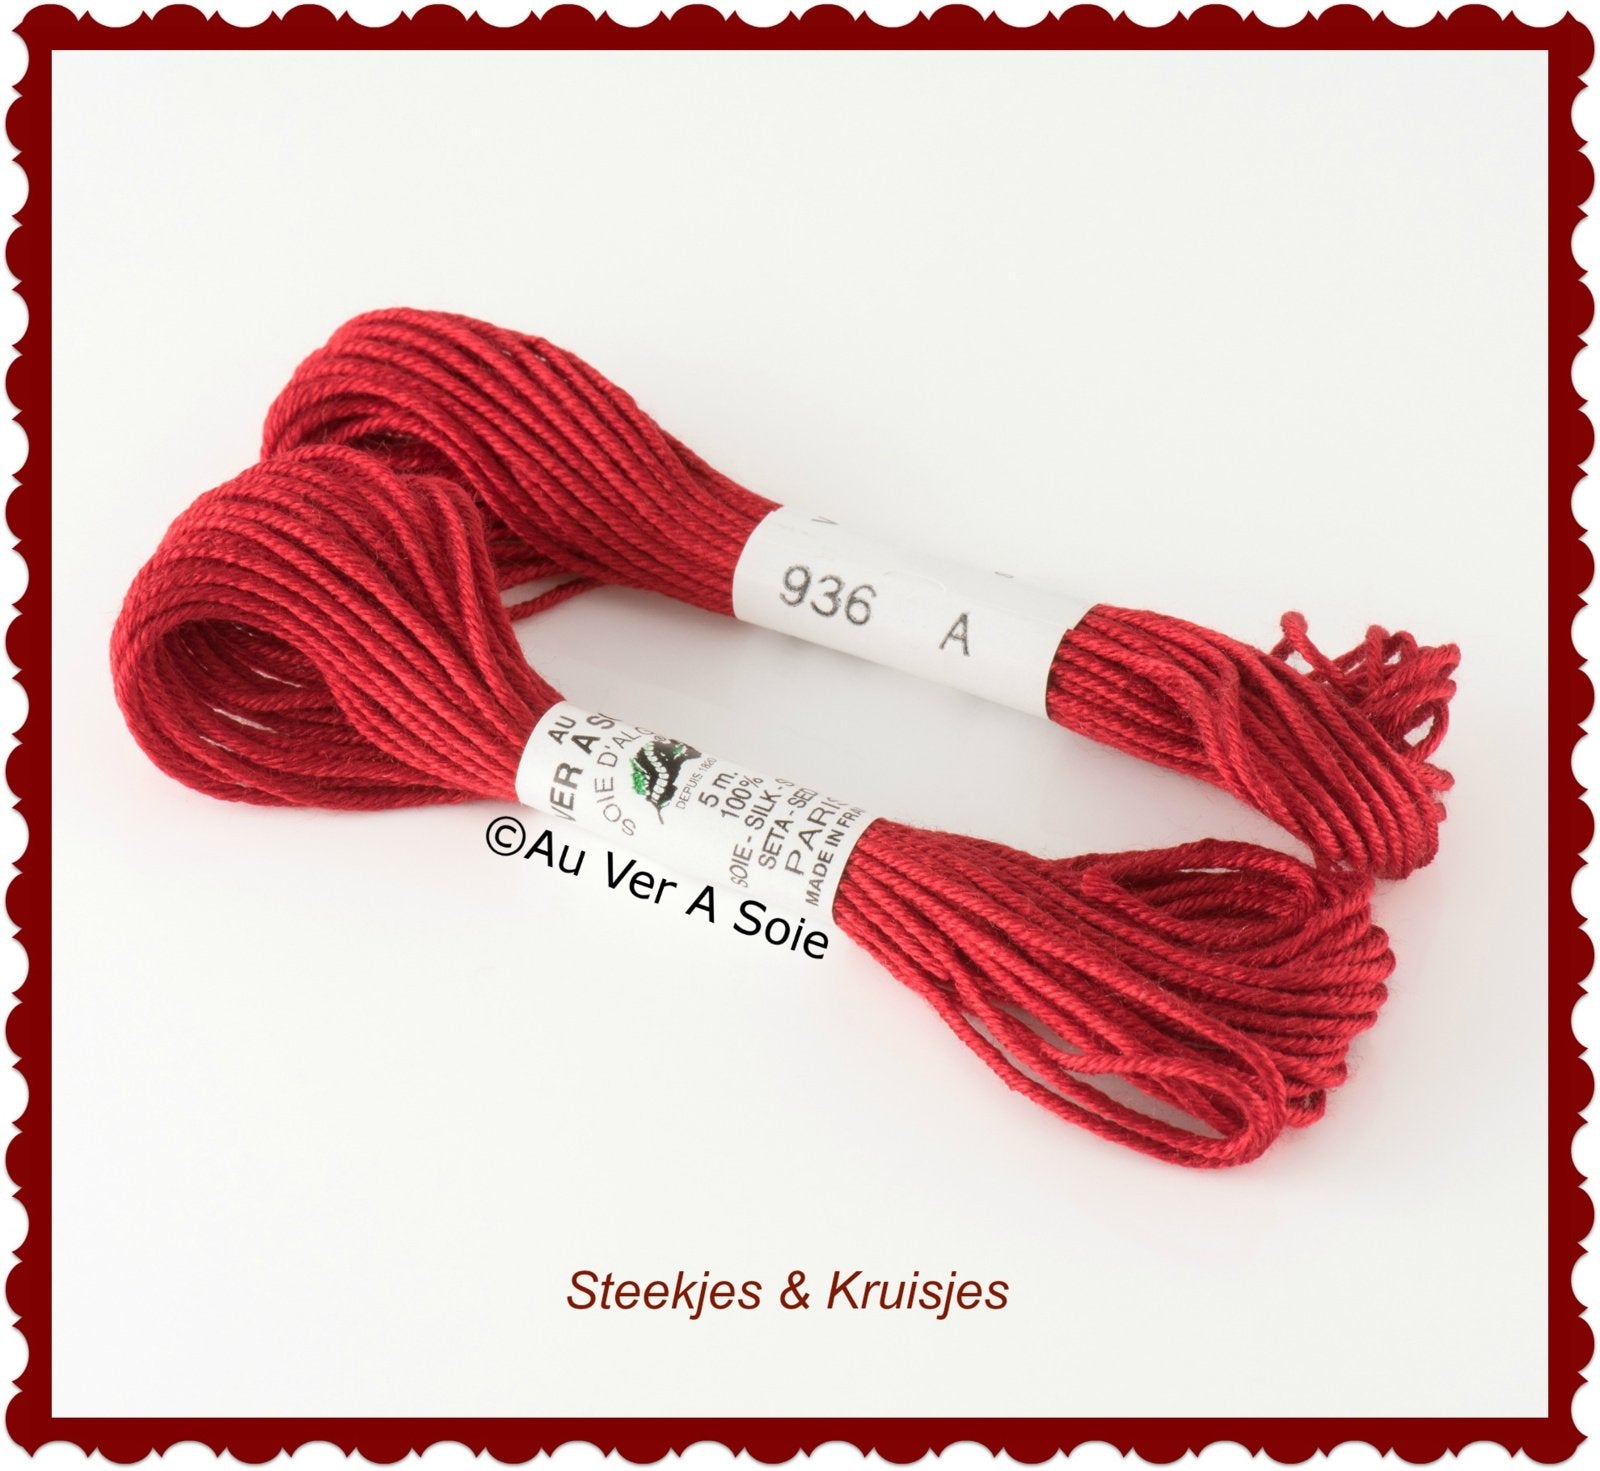 Au ver ie "soie d'alger" silk yarn color no. 936